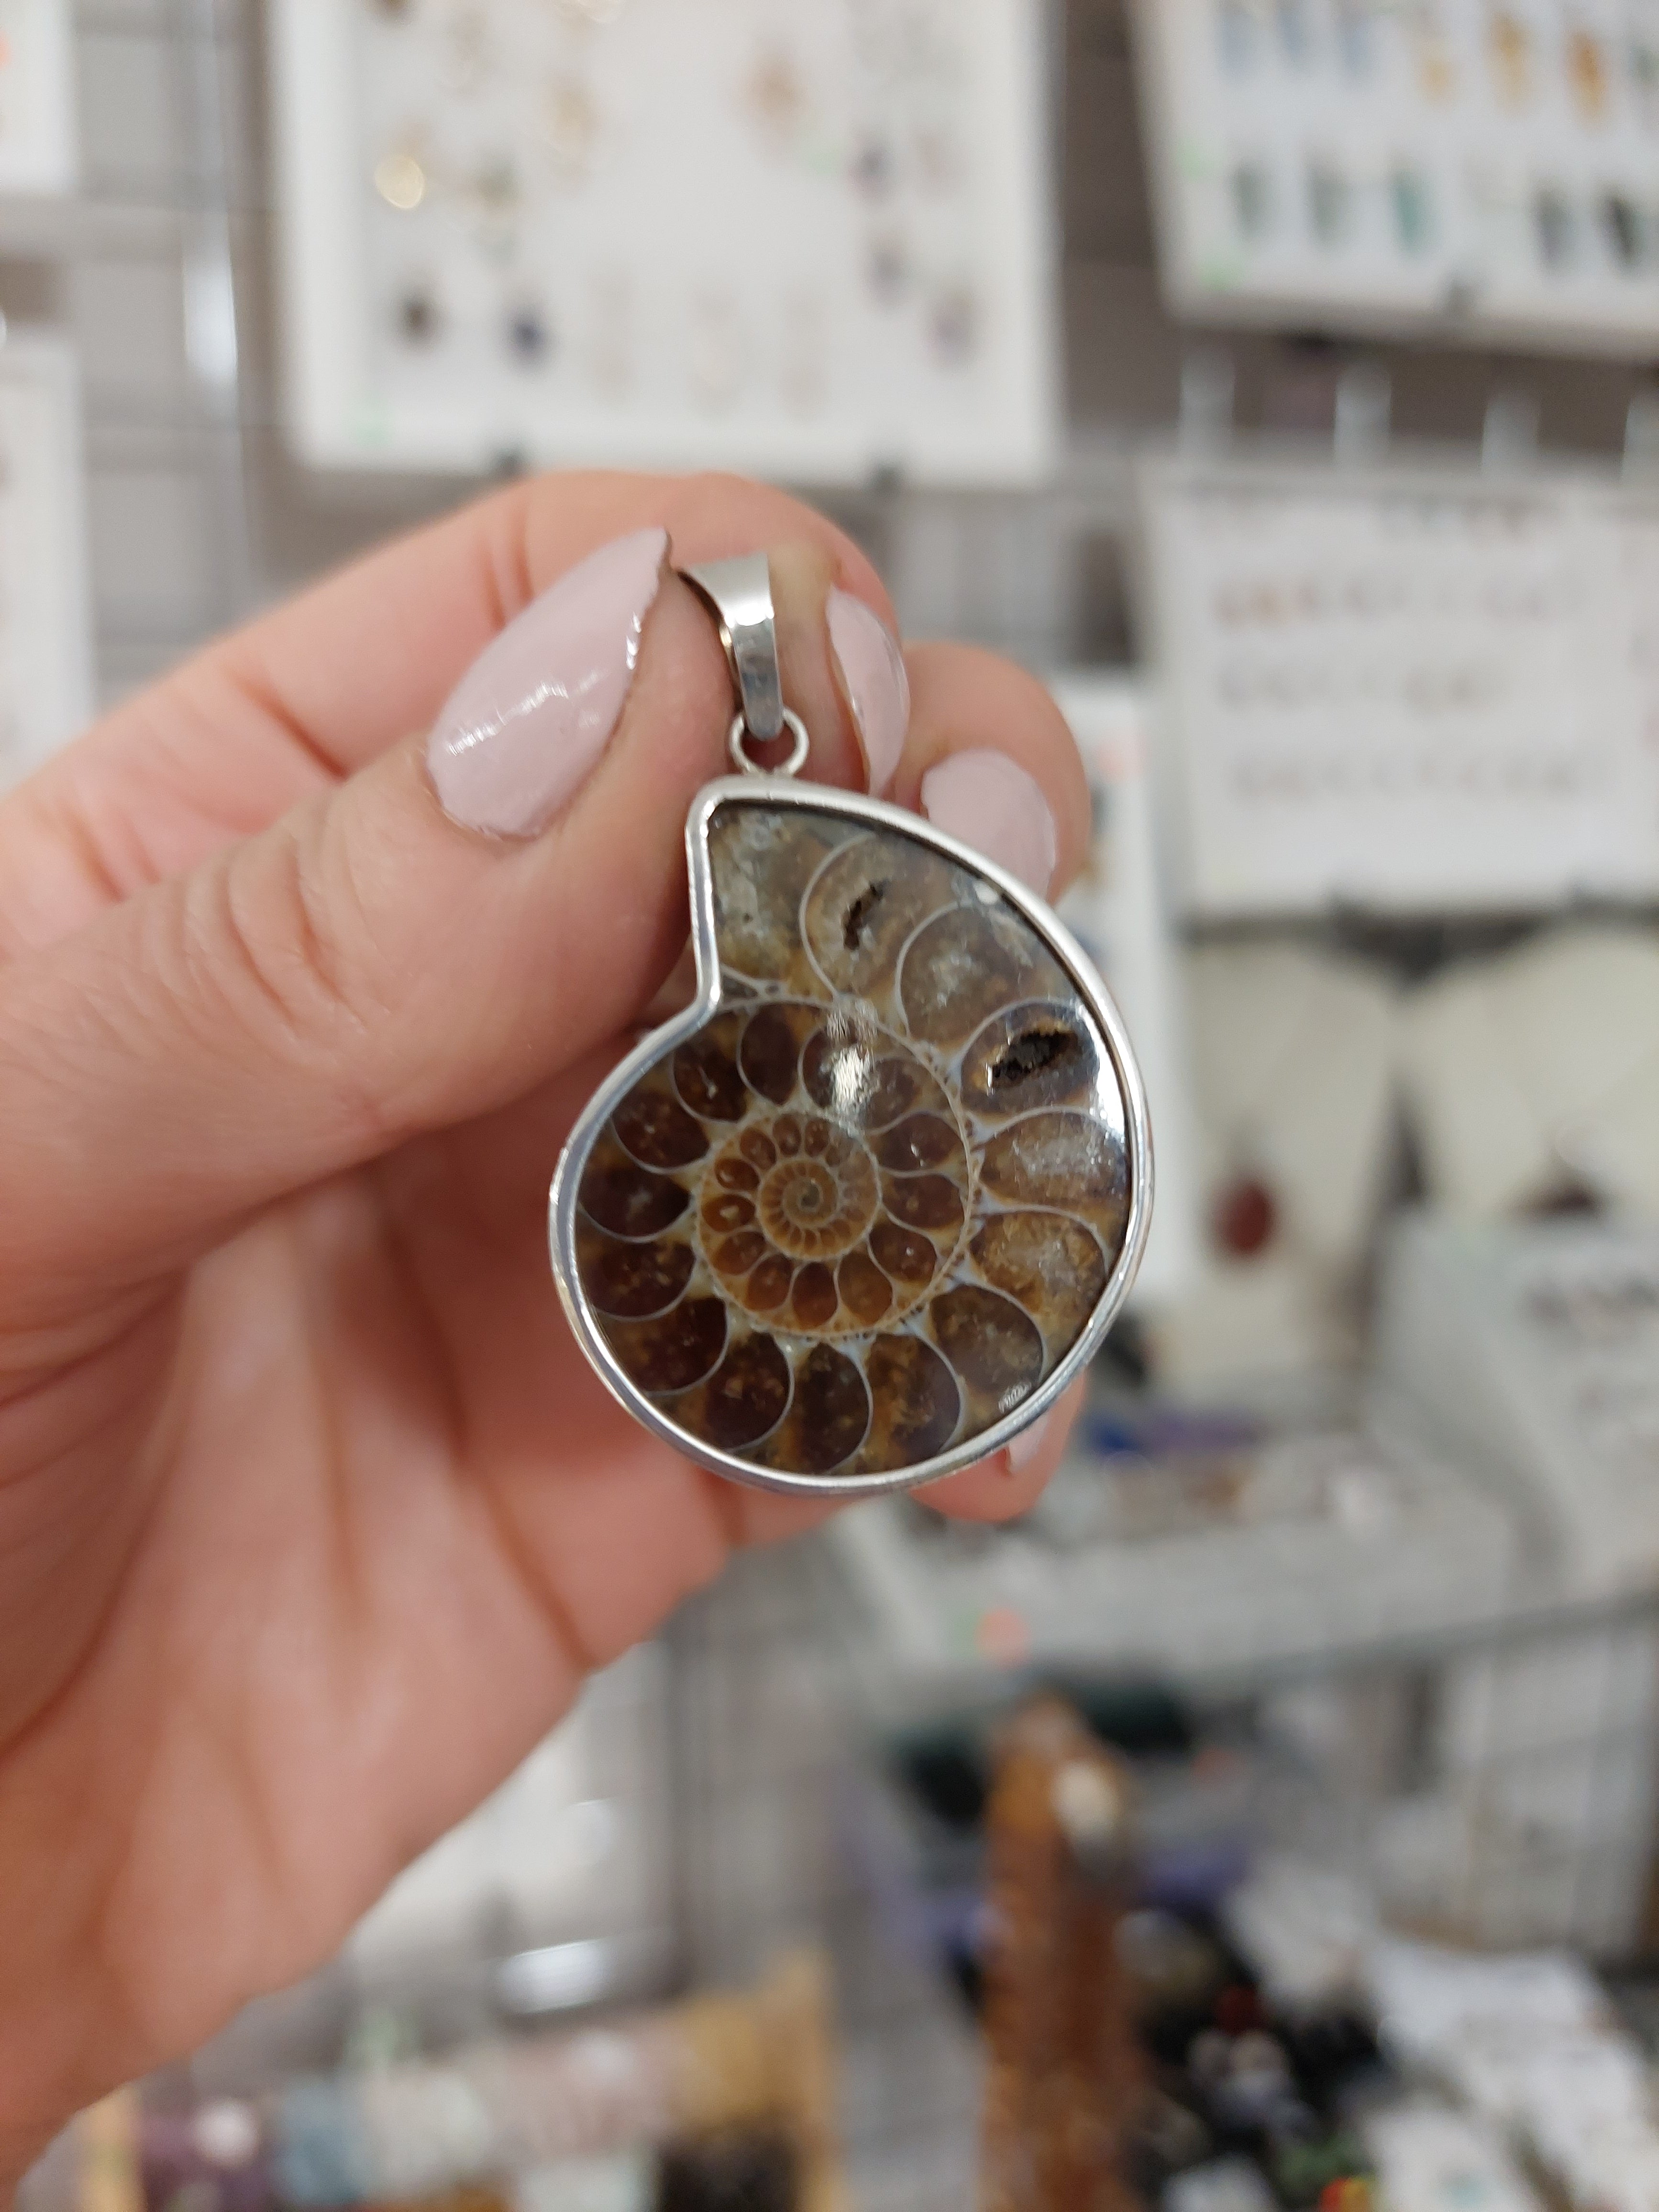 Ammonite Pendant - Sterling Silver